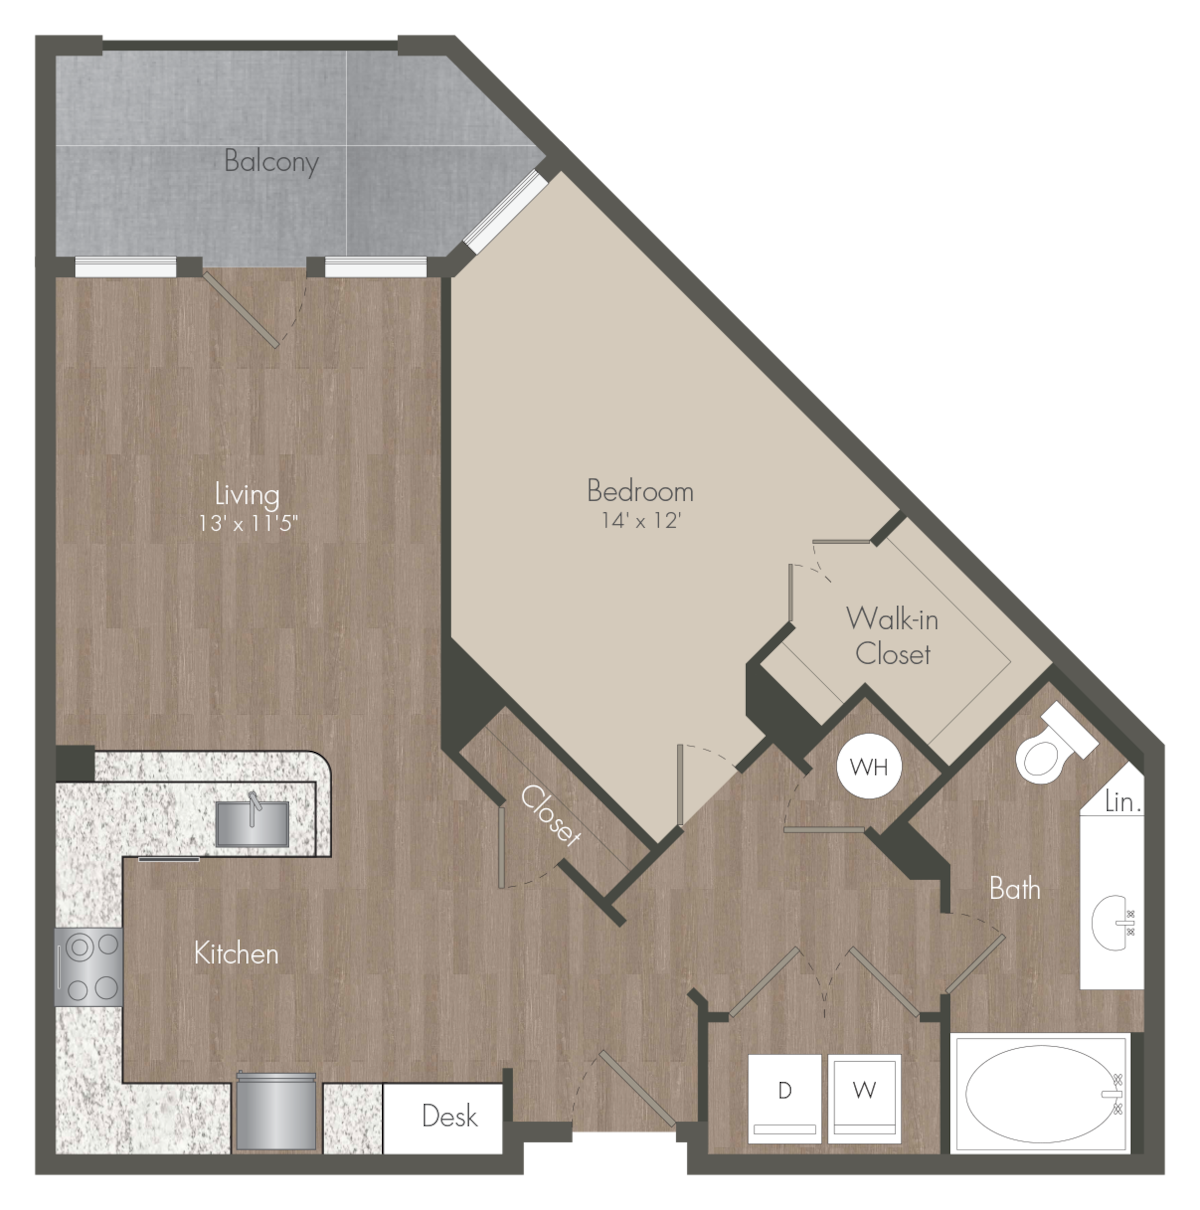 Floorplan diagram for A4 - 1x1, showing 1 bedroom